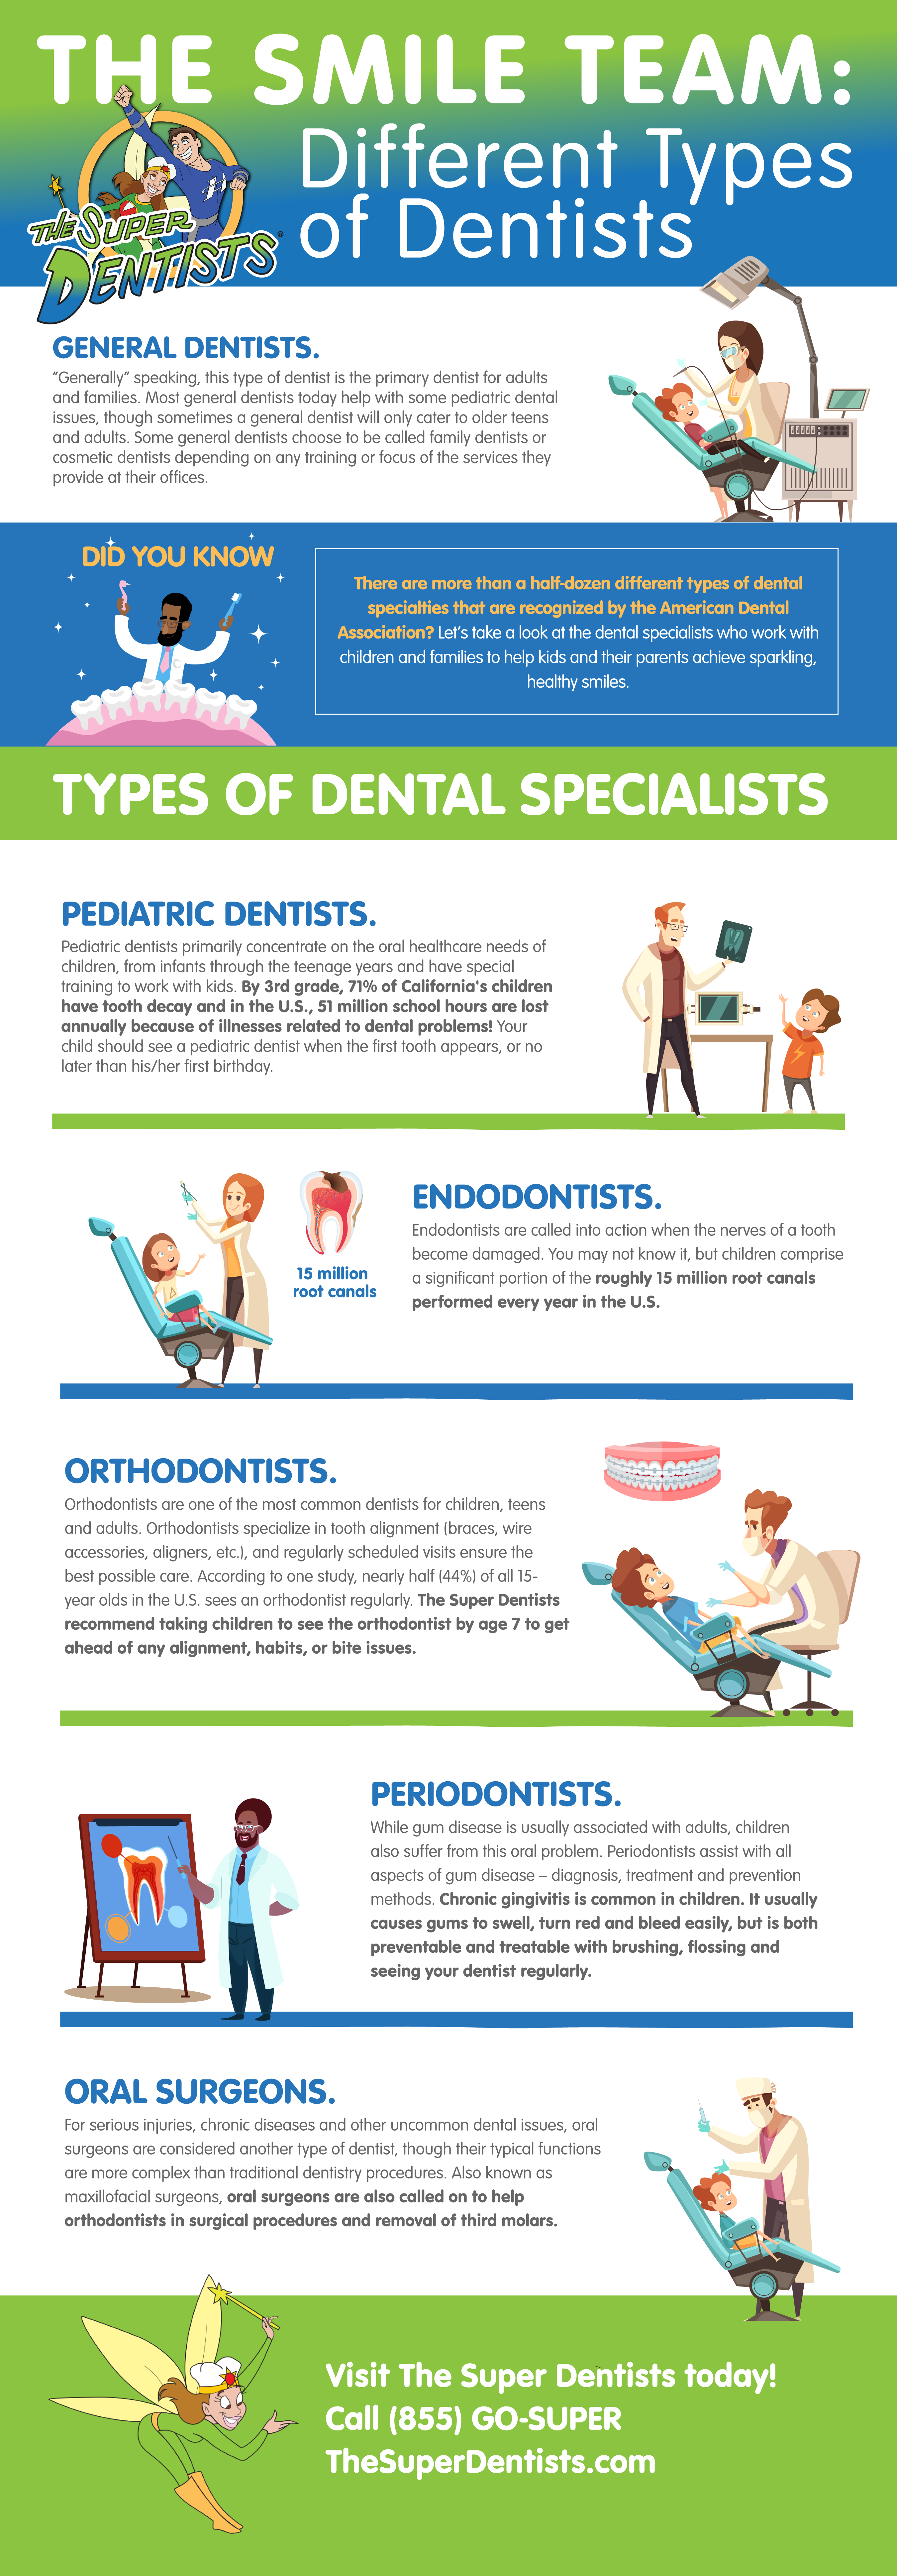 How do you market a pediatric dental office?